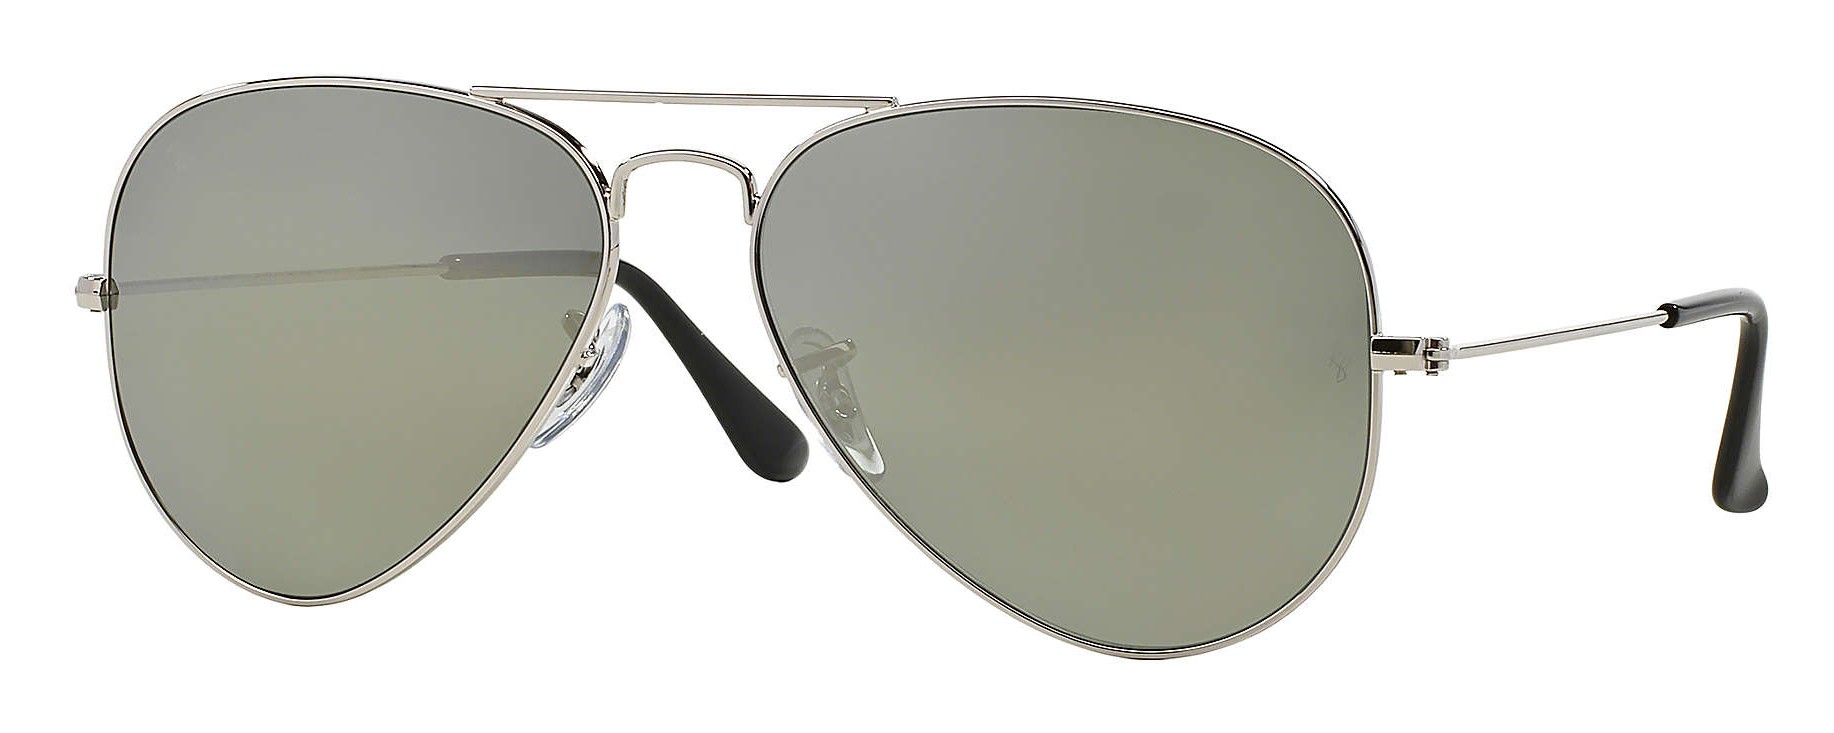 Ray Ban Rb3025 003 59 Original Aviator Classic Silver Polarized Grey Mirror Lenses Sunglass Ray Ban Eyewear Avvenice